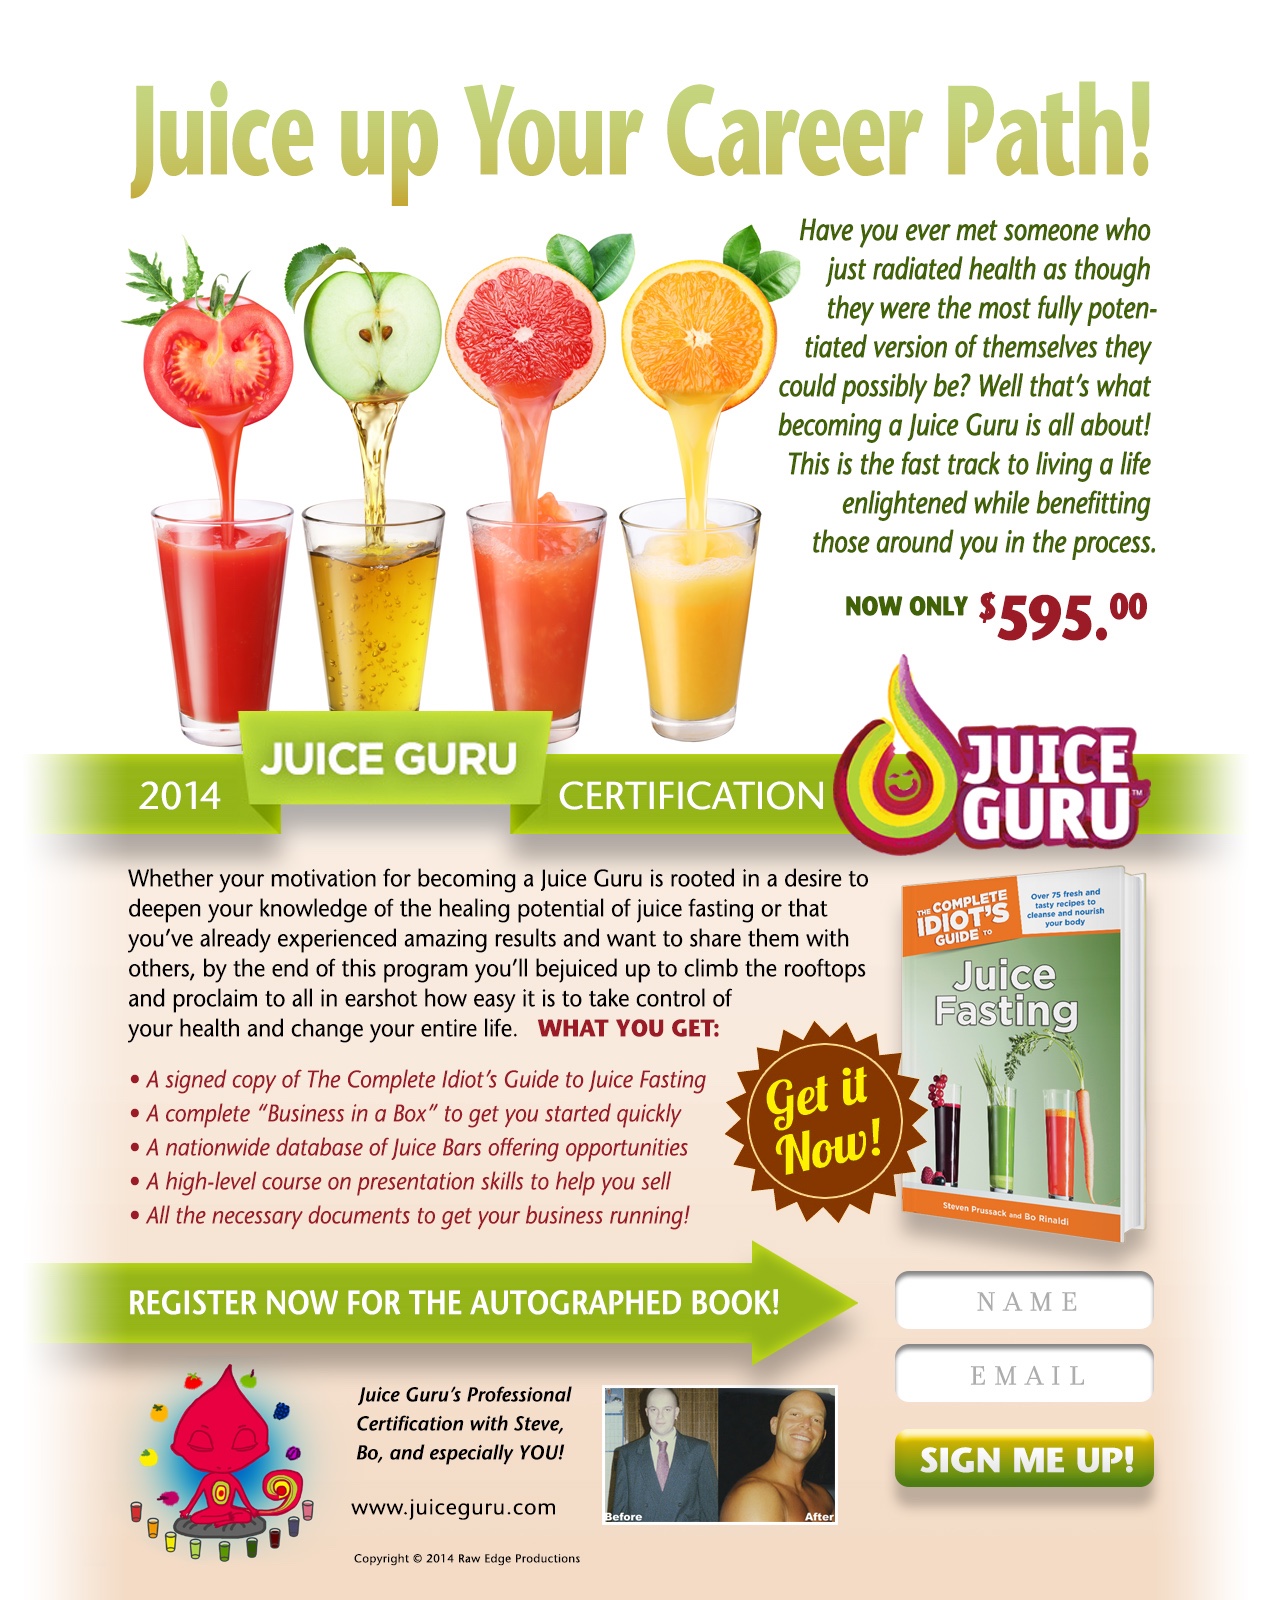 Juice Guru Certification